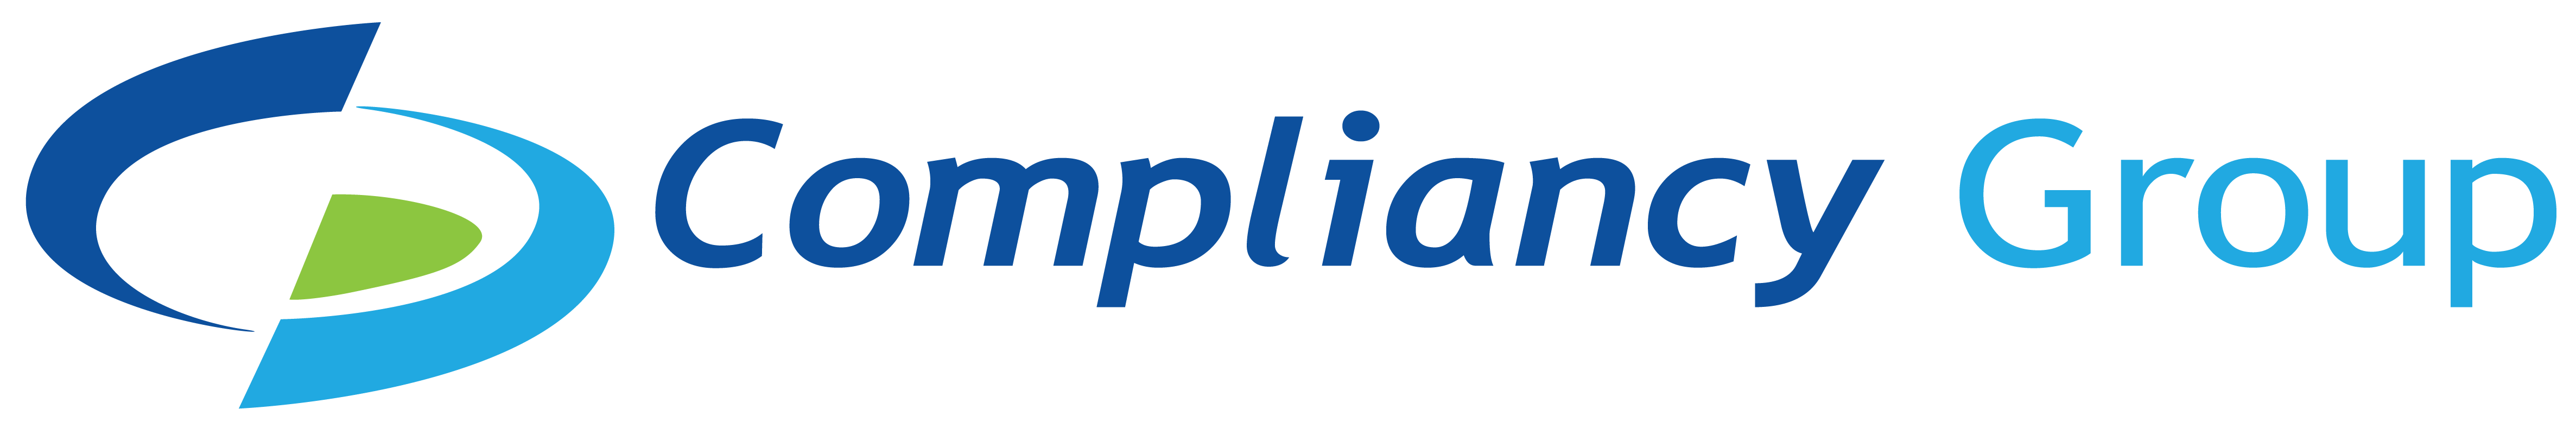 Compliancy Group 300 dpi logo